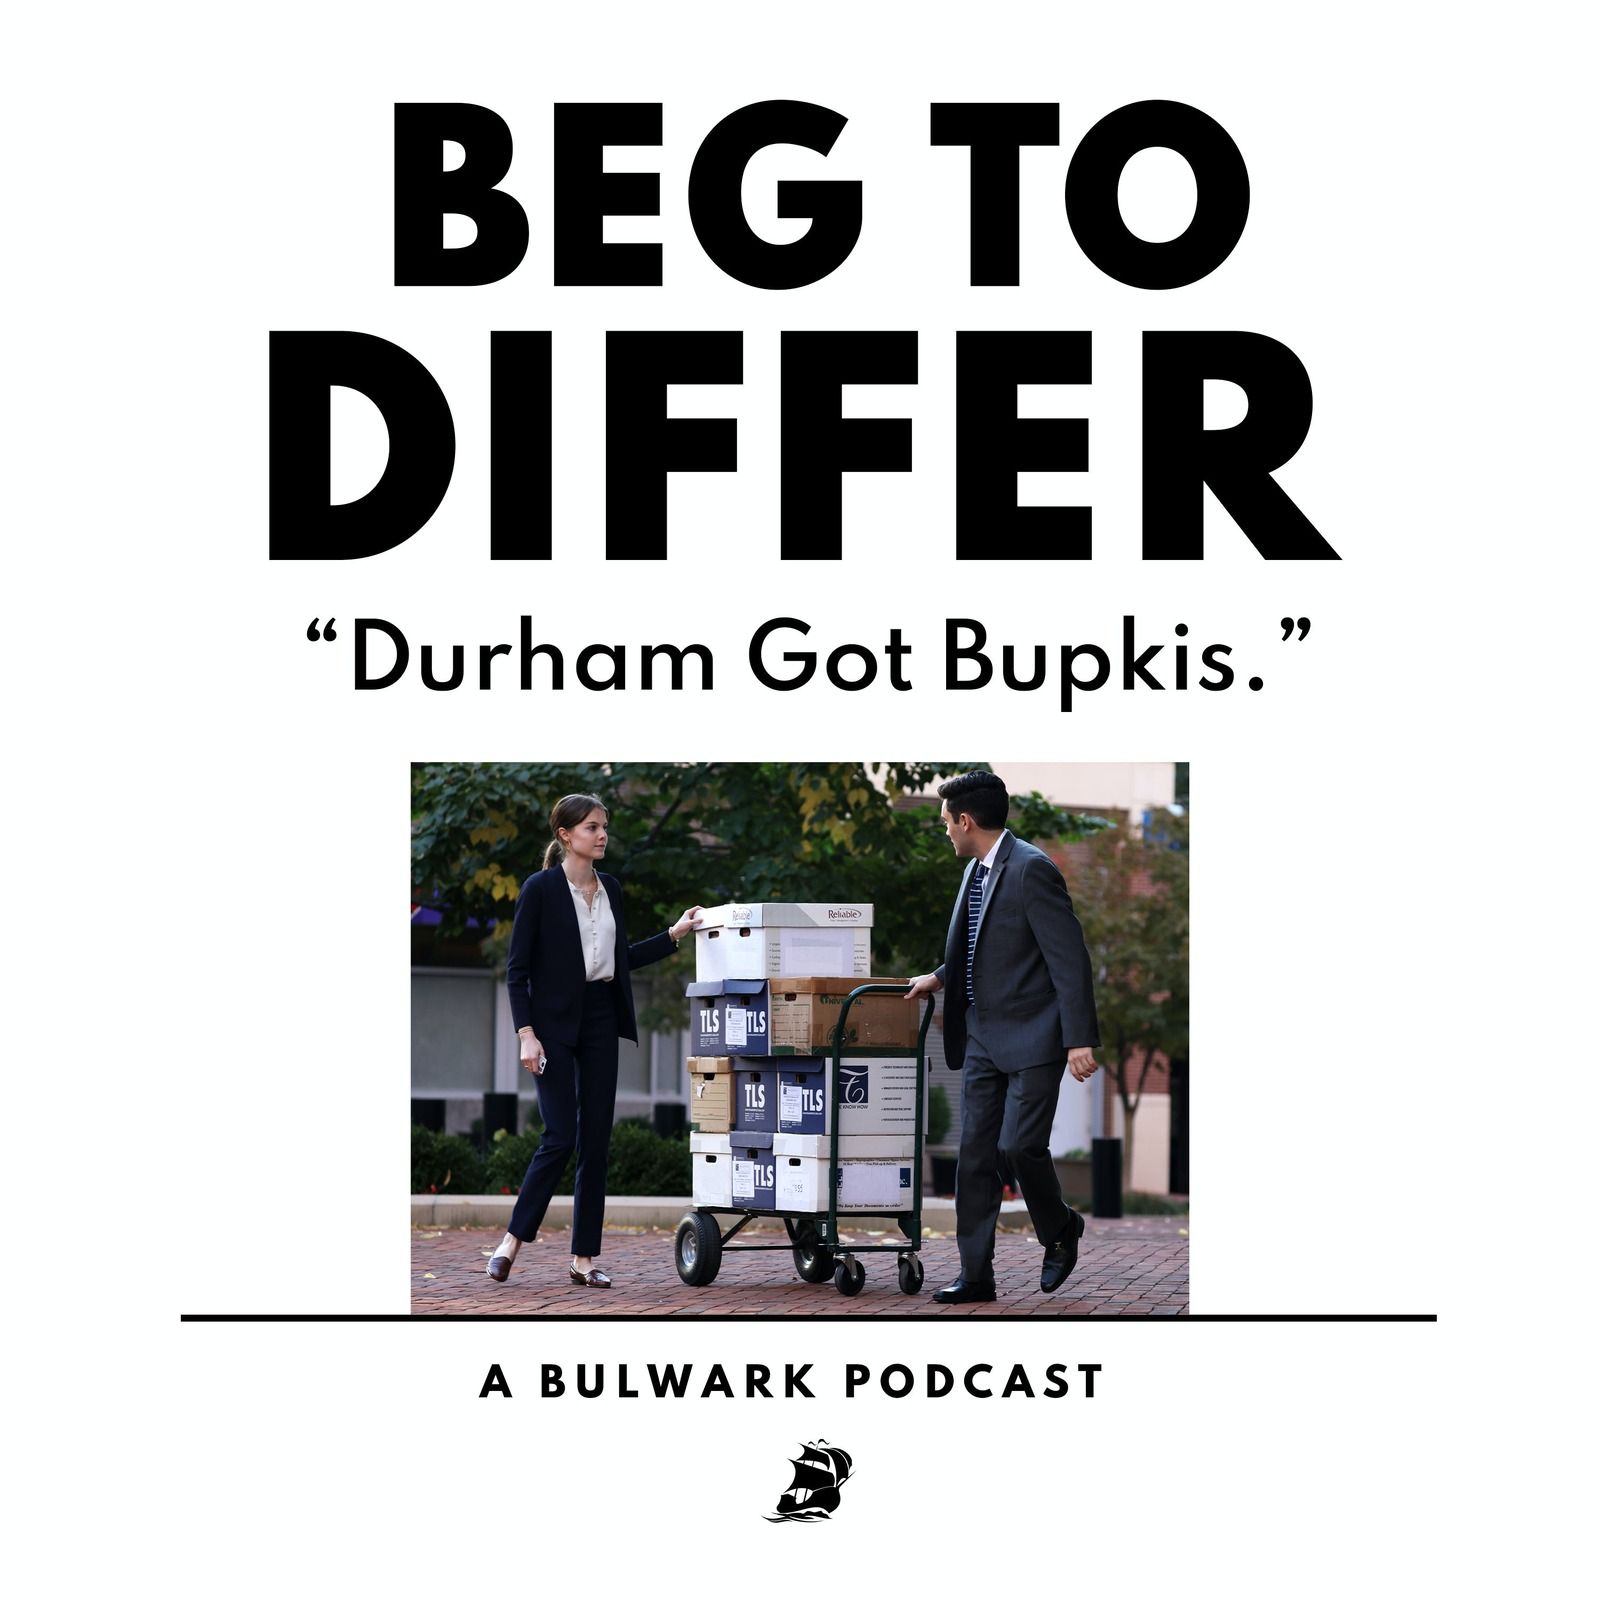 Durham Got Bupkis